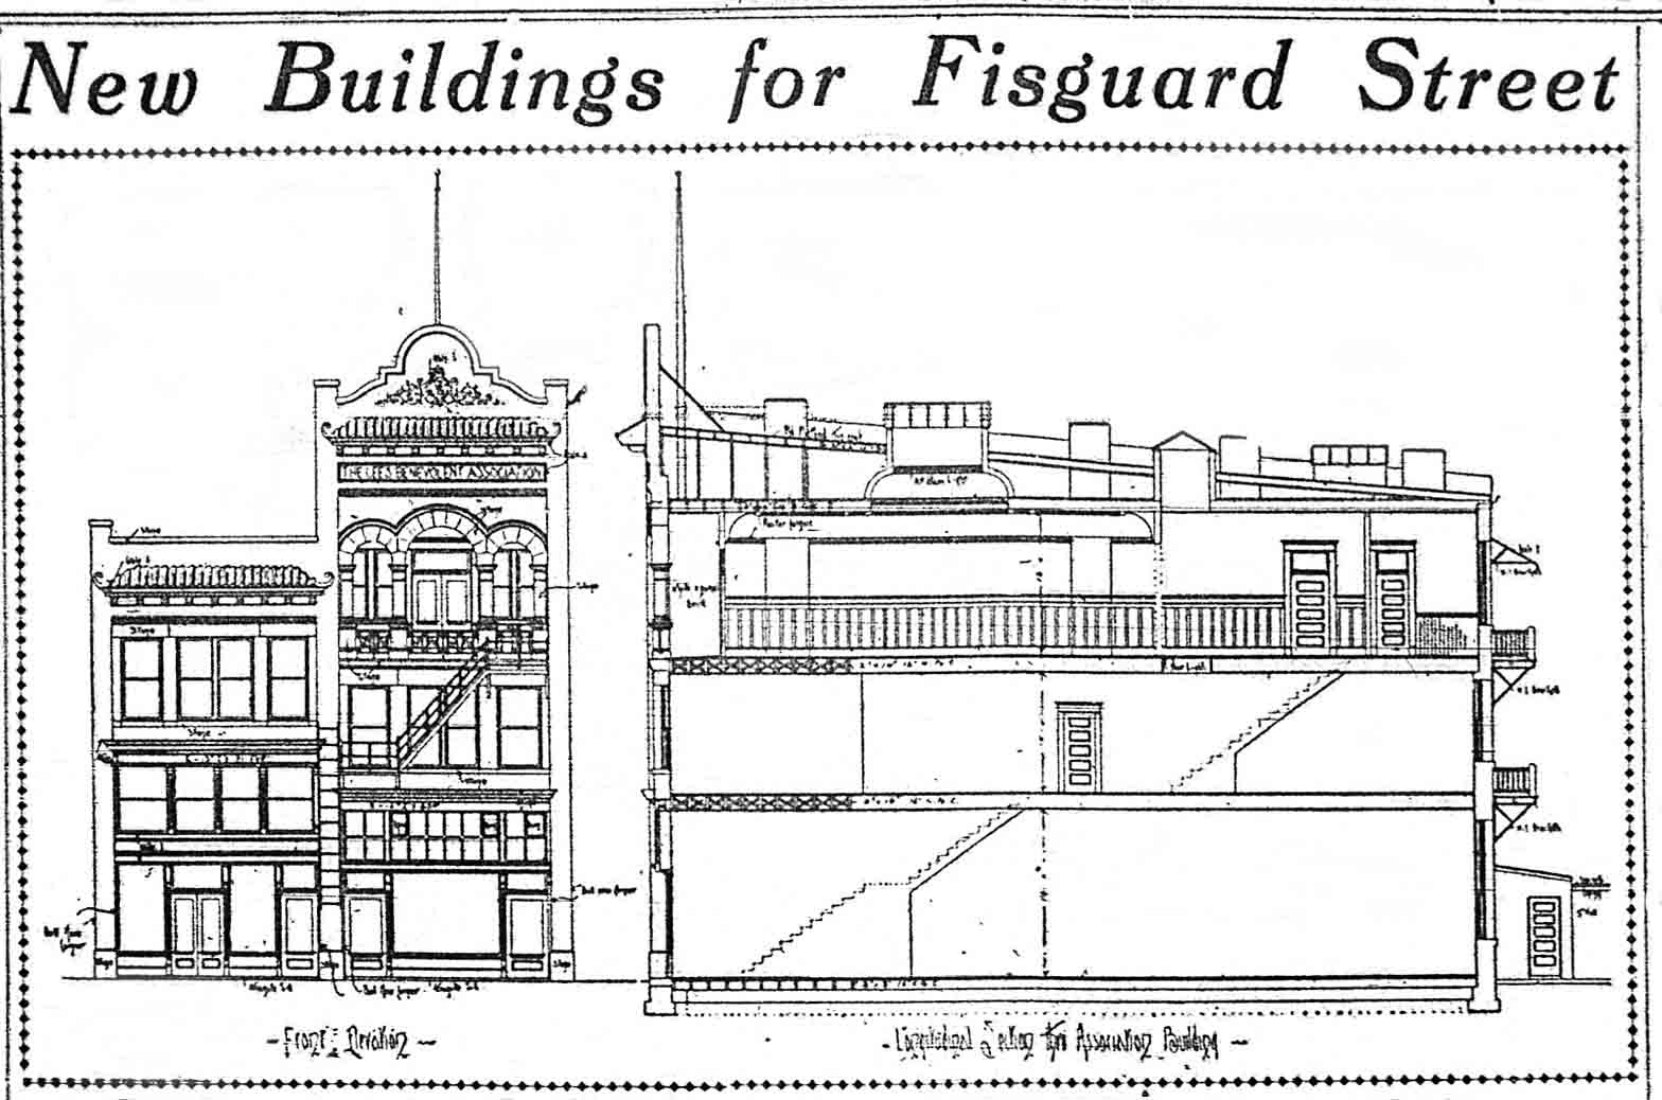 1910 architectural drawing of the Lee Benvolent Association buildings, now 612 Fisgard Street and 614 Fisgard Street